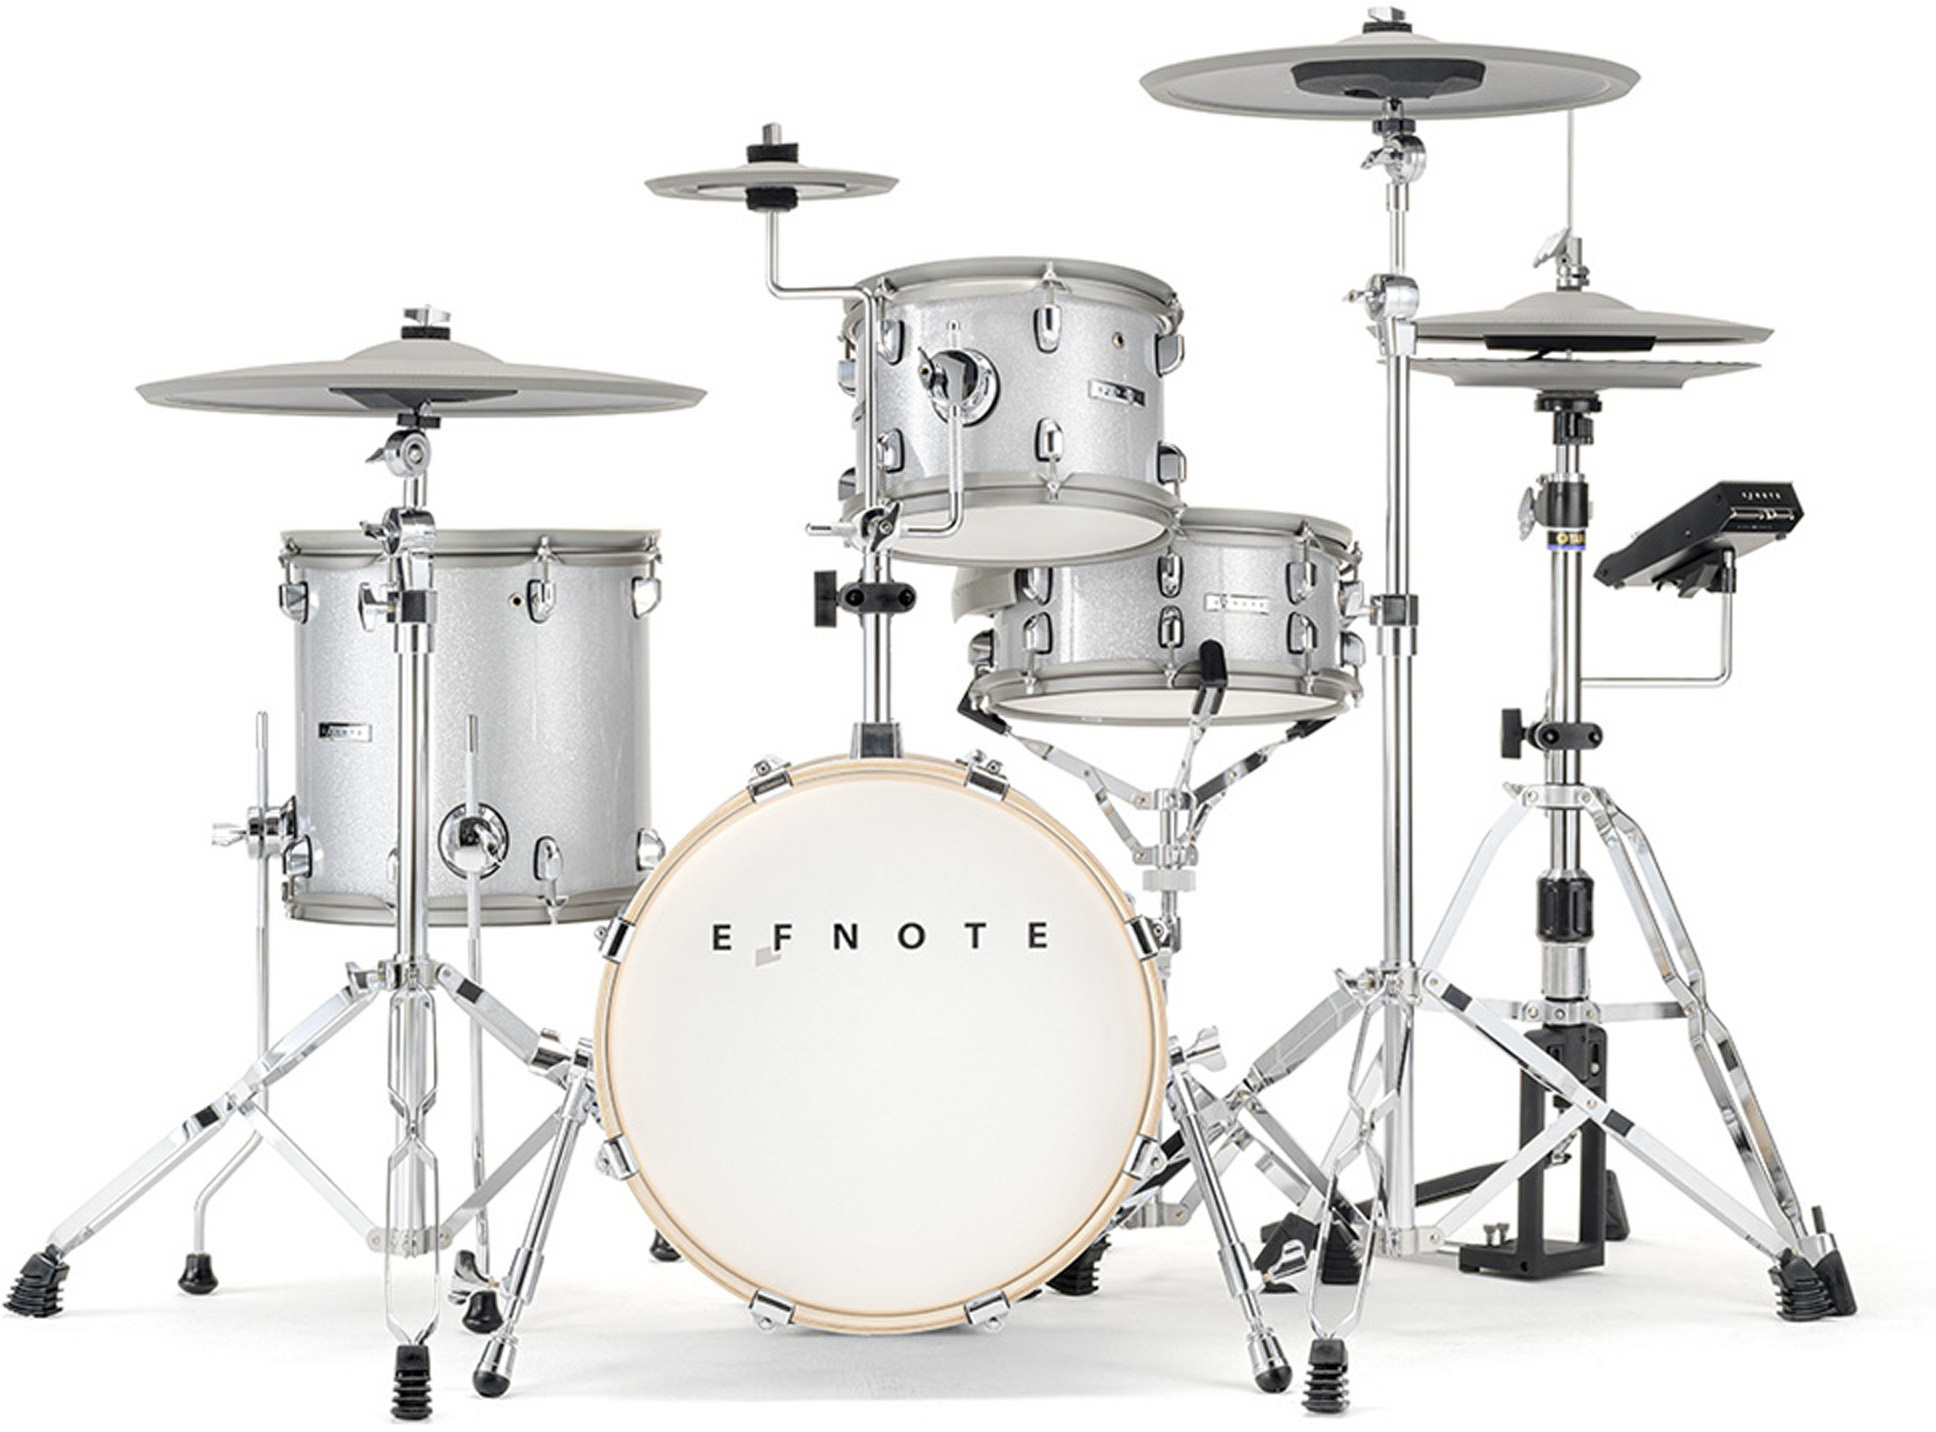 Efnote Efd5 Drum Kit - Electronic drum kit & set - Main picture